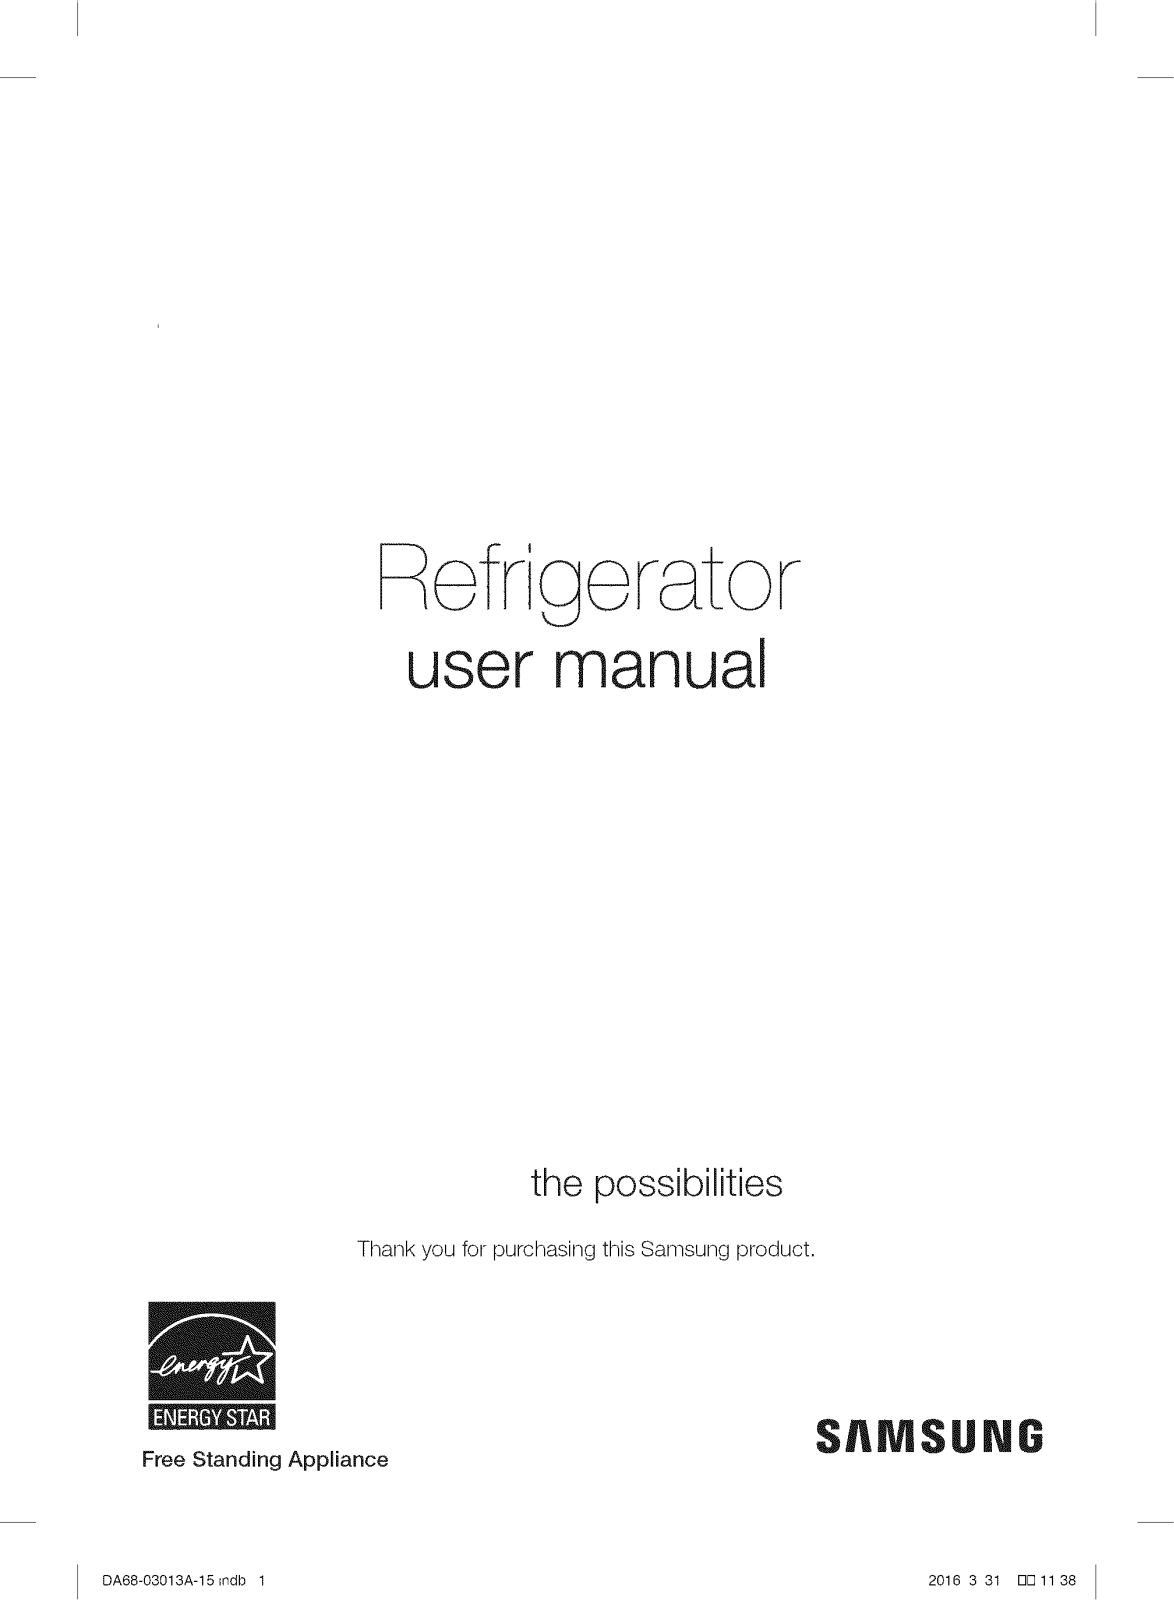 Samsung RF34H9960S4/AA-05, RF34H9960S4/AA-04, RF34H9960S4/AA-03, RF34H9960S4/AA-02, RF34H9960S4/AA-01 Owner’s Manual